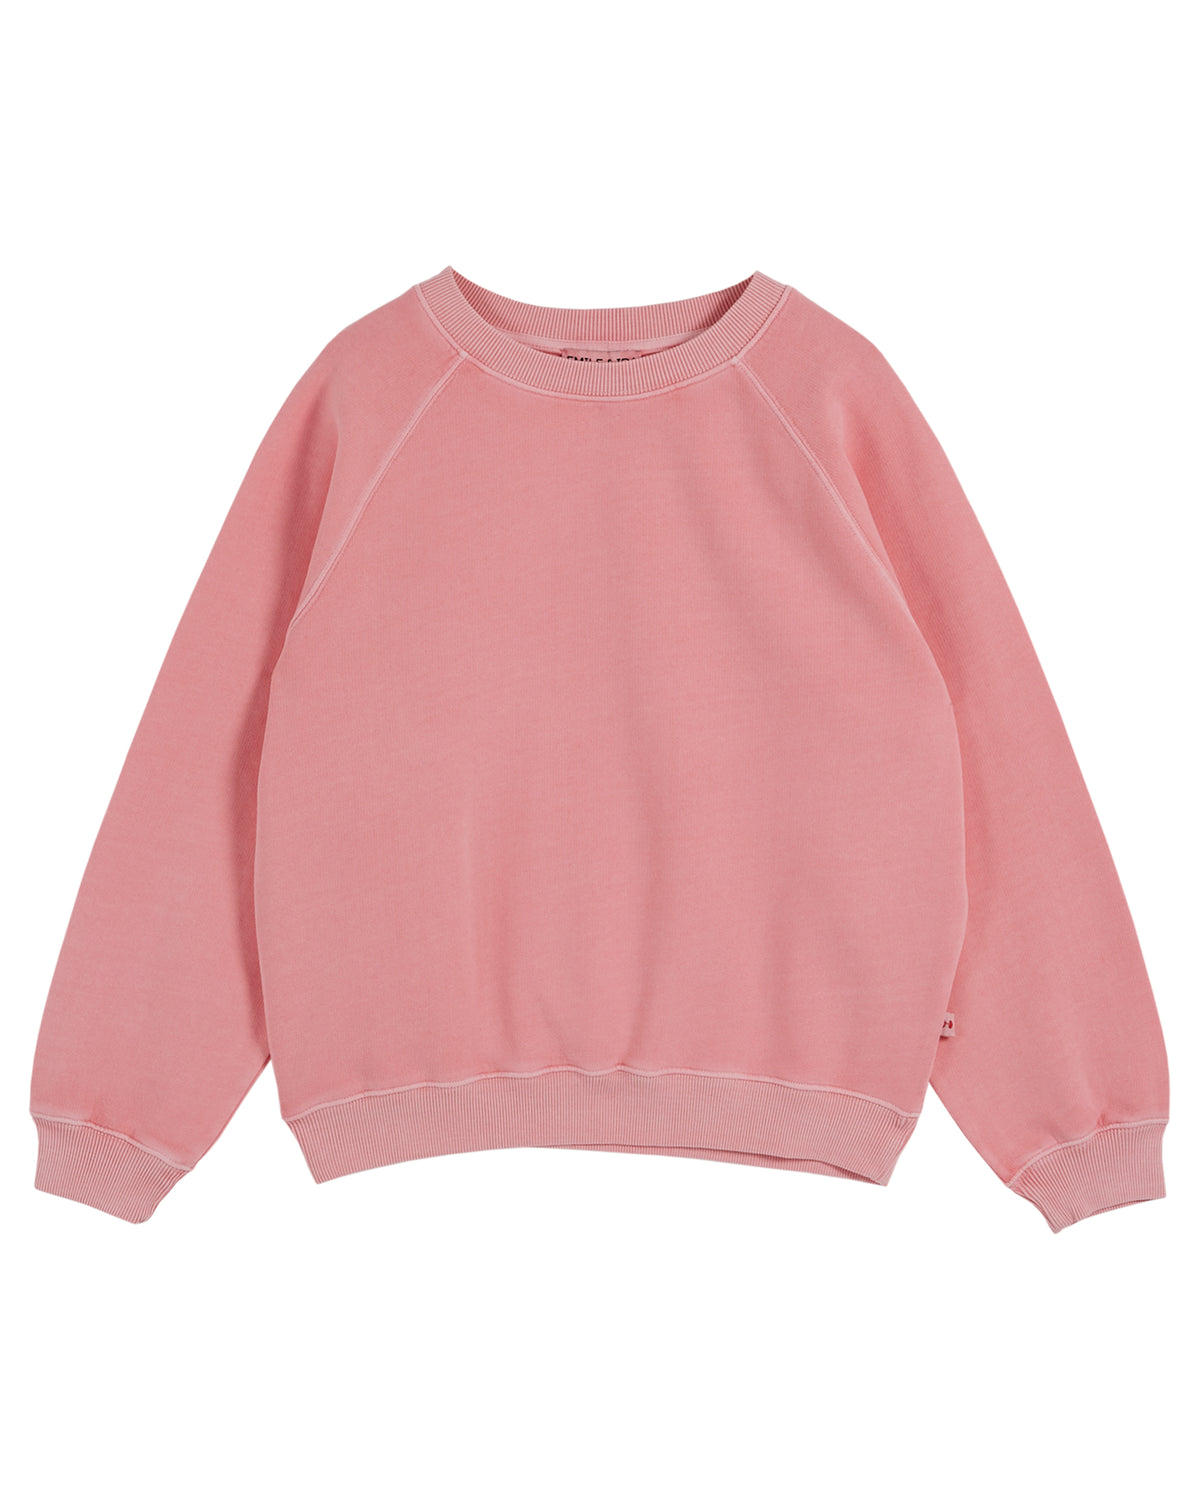 Slightly faded pink raglan sleeved sweatshirt